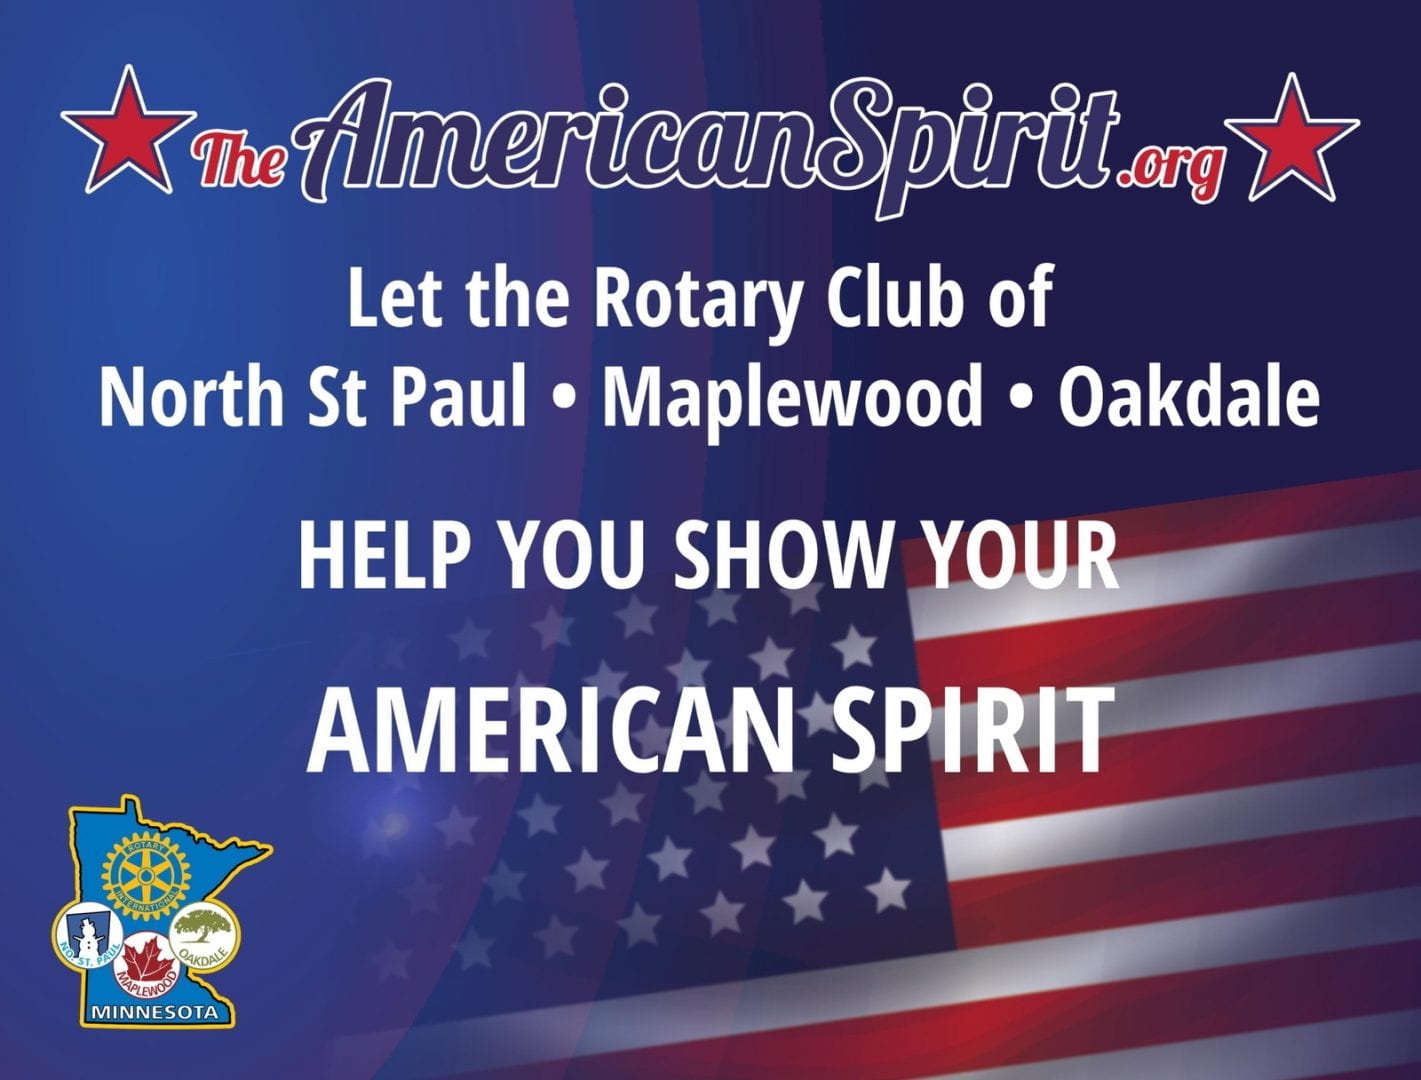 Rotary Club announces new spirit flag design, Community